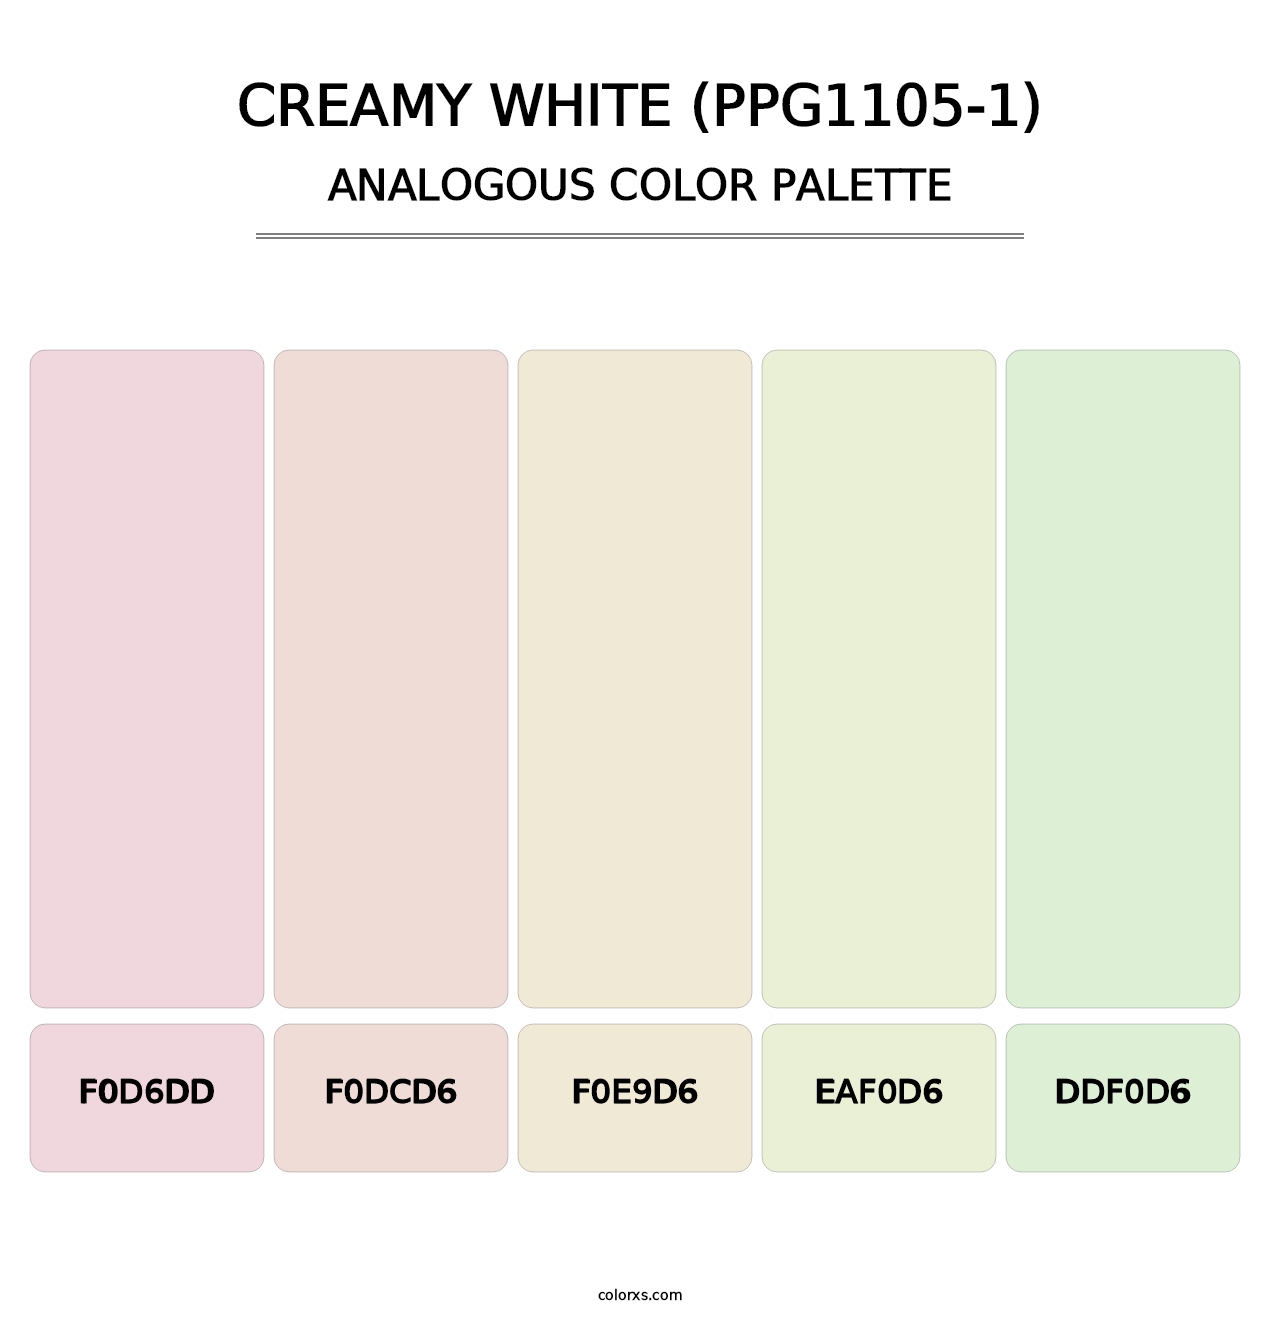 Creamy White (PPG1105-1) - Analogous Color Palette